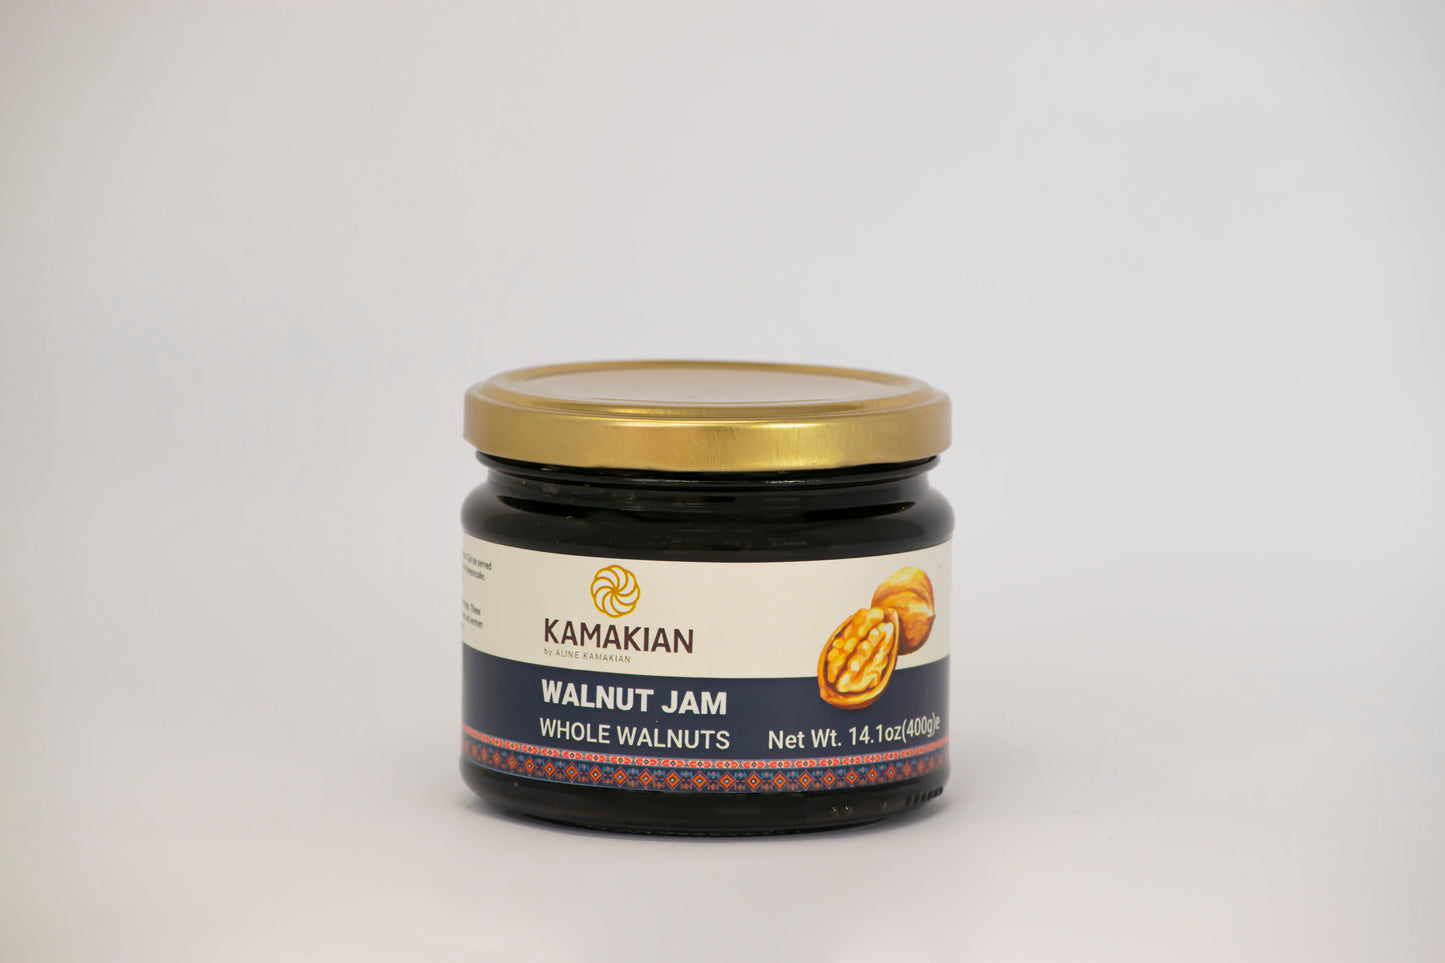 Walnut Jam made in Lebanon